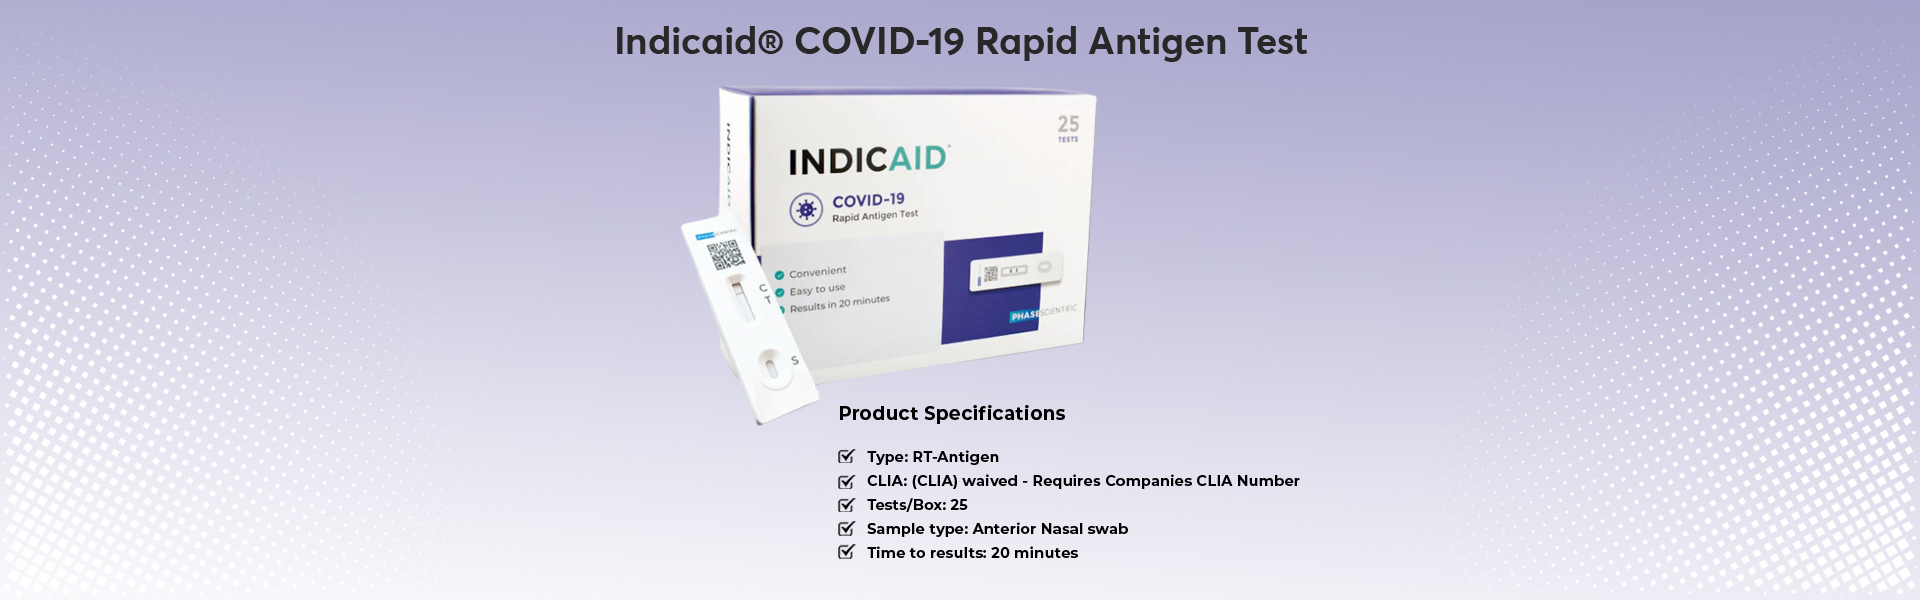 Indicaid®-COVID-19-Rapid-Antigen-Test